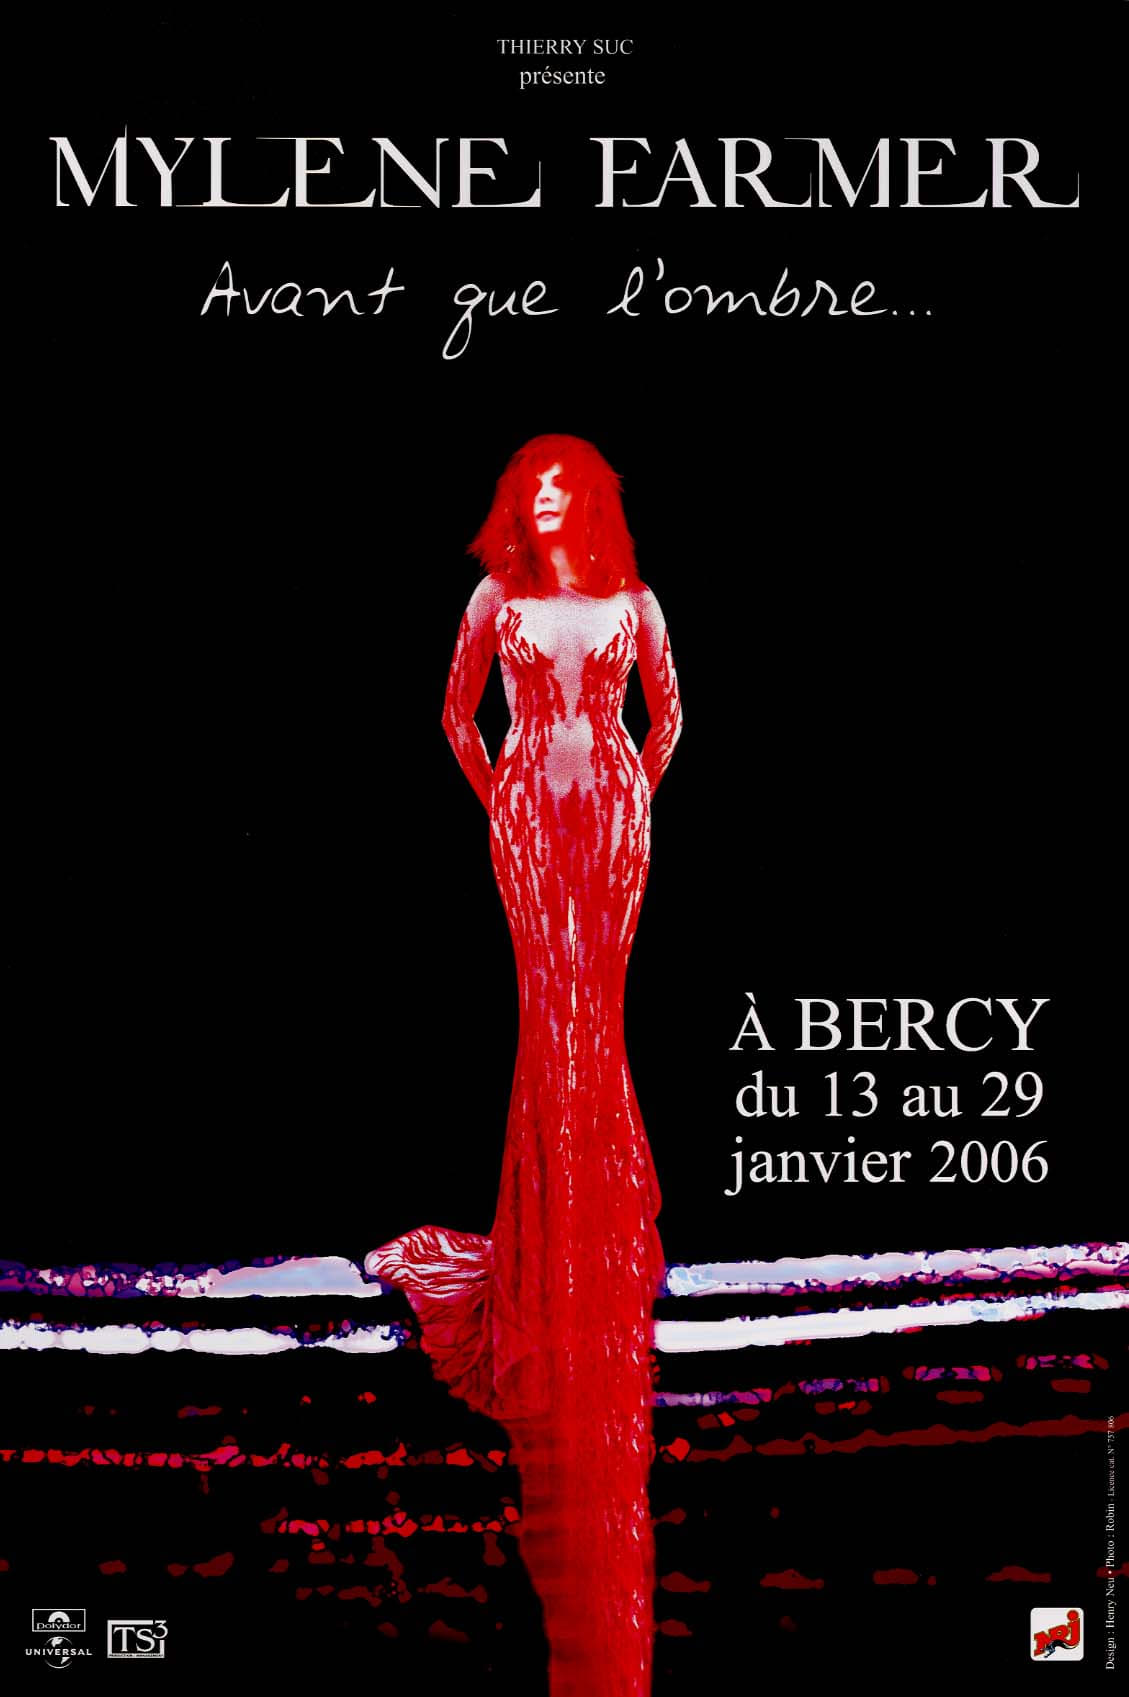 Mylène Farmer : En concert Movie. Where To Watch Streaming Online